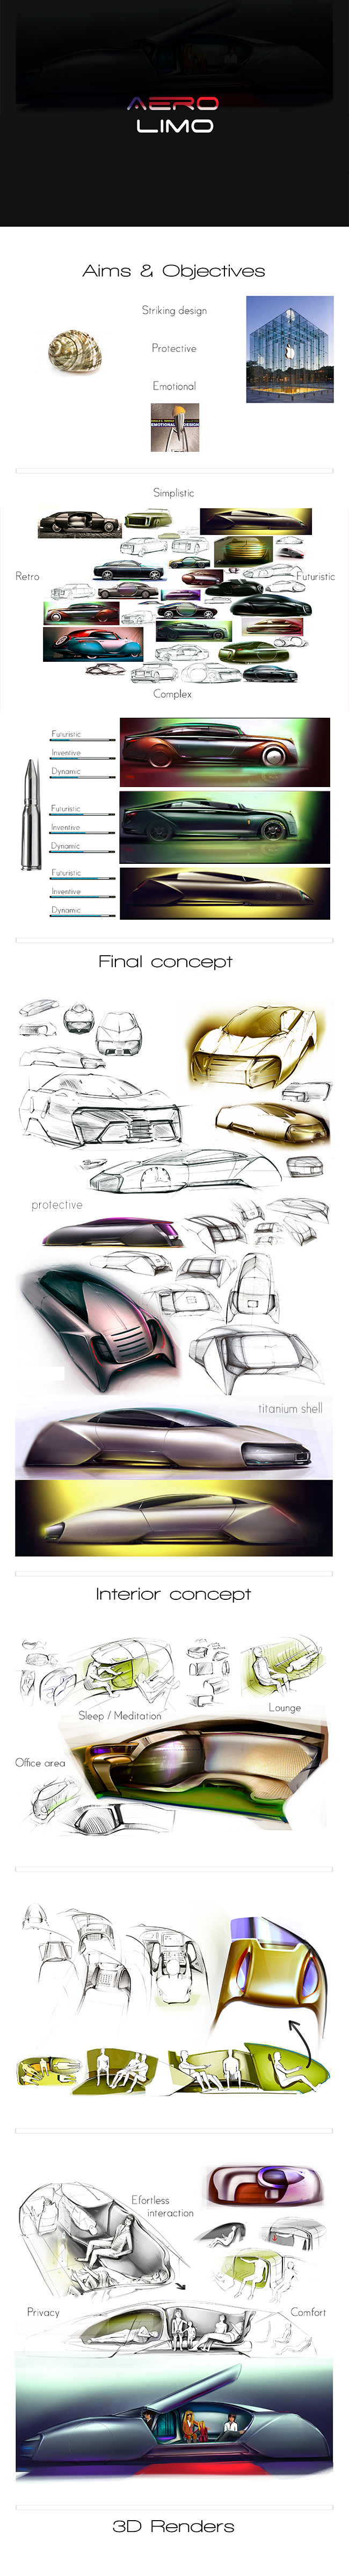 aero  limousine  Ultra luxury  degree project  Coventry University  Laurentiu Bradea  designlaur  Renders sketches 3D